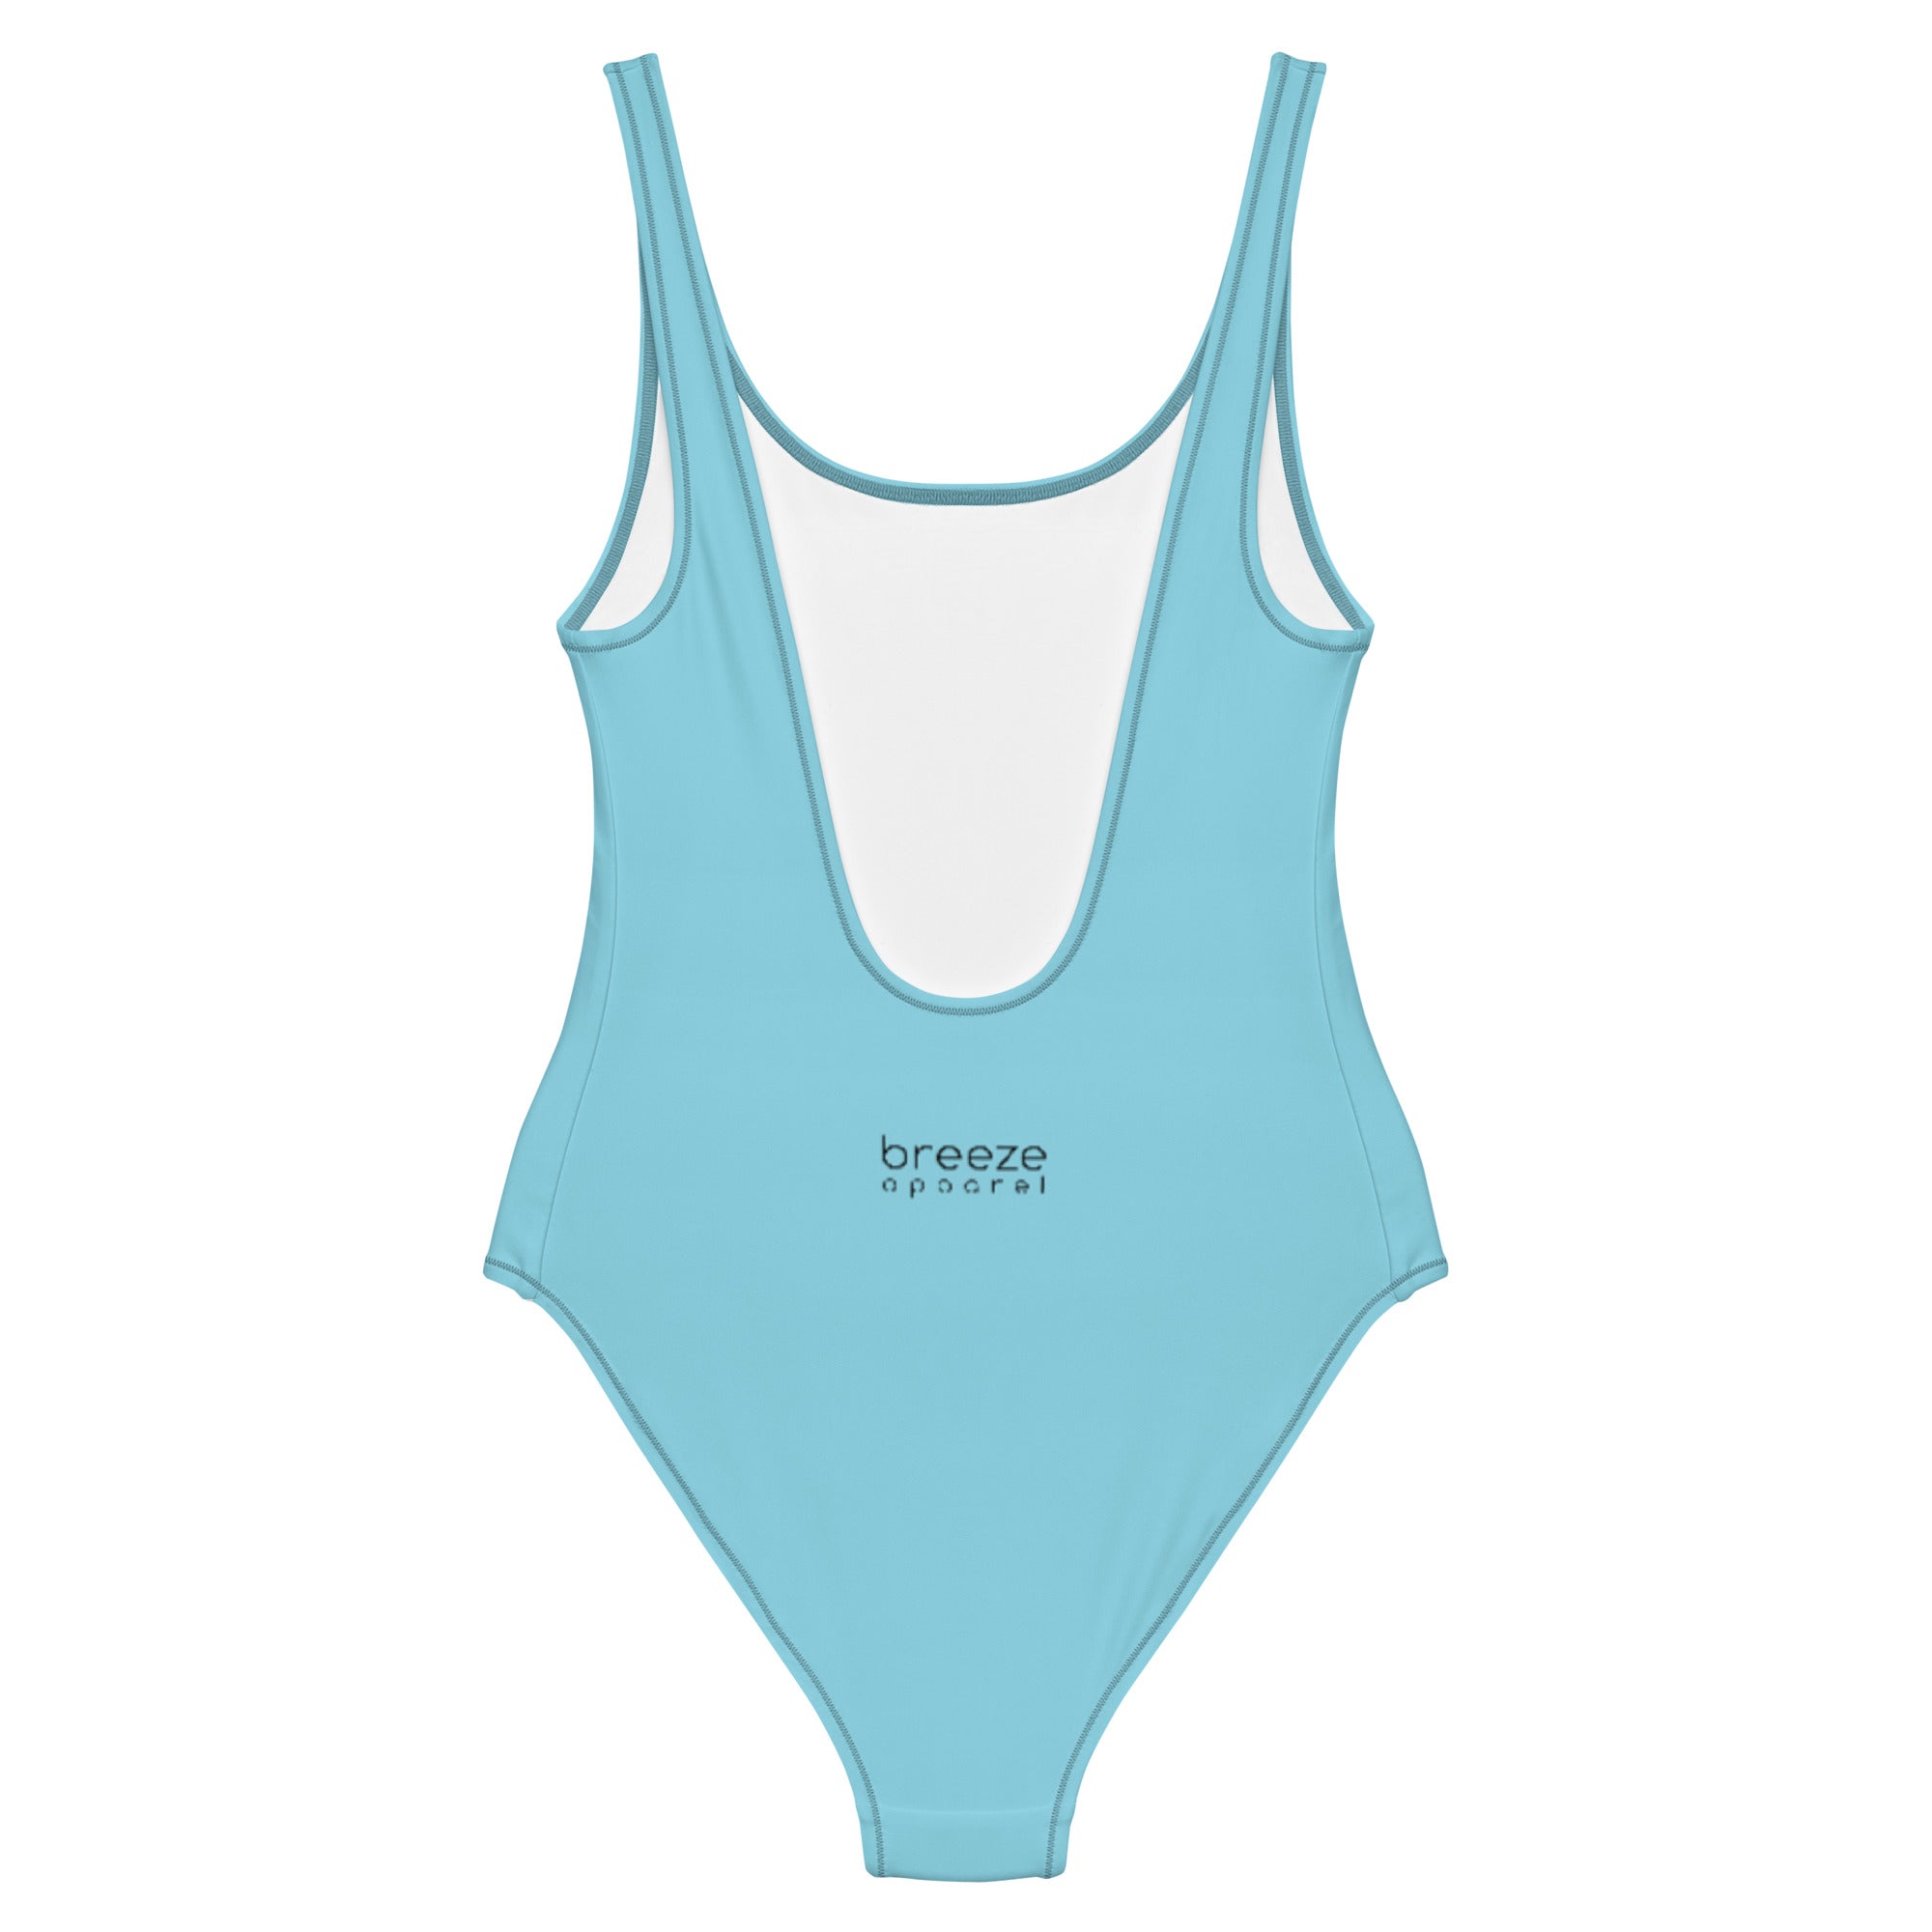 'Pastel Blue' one-piece swimsuit